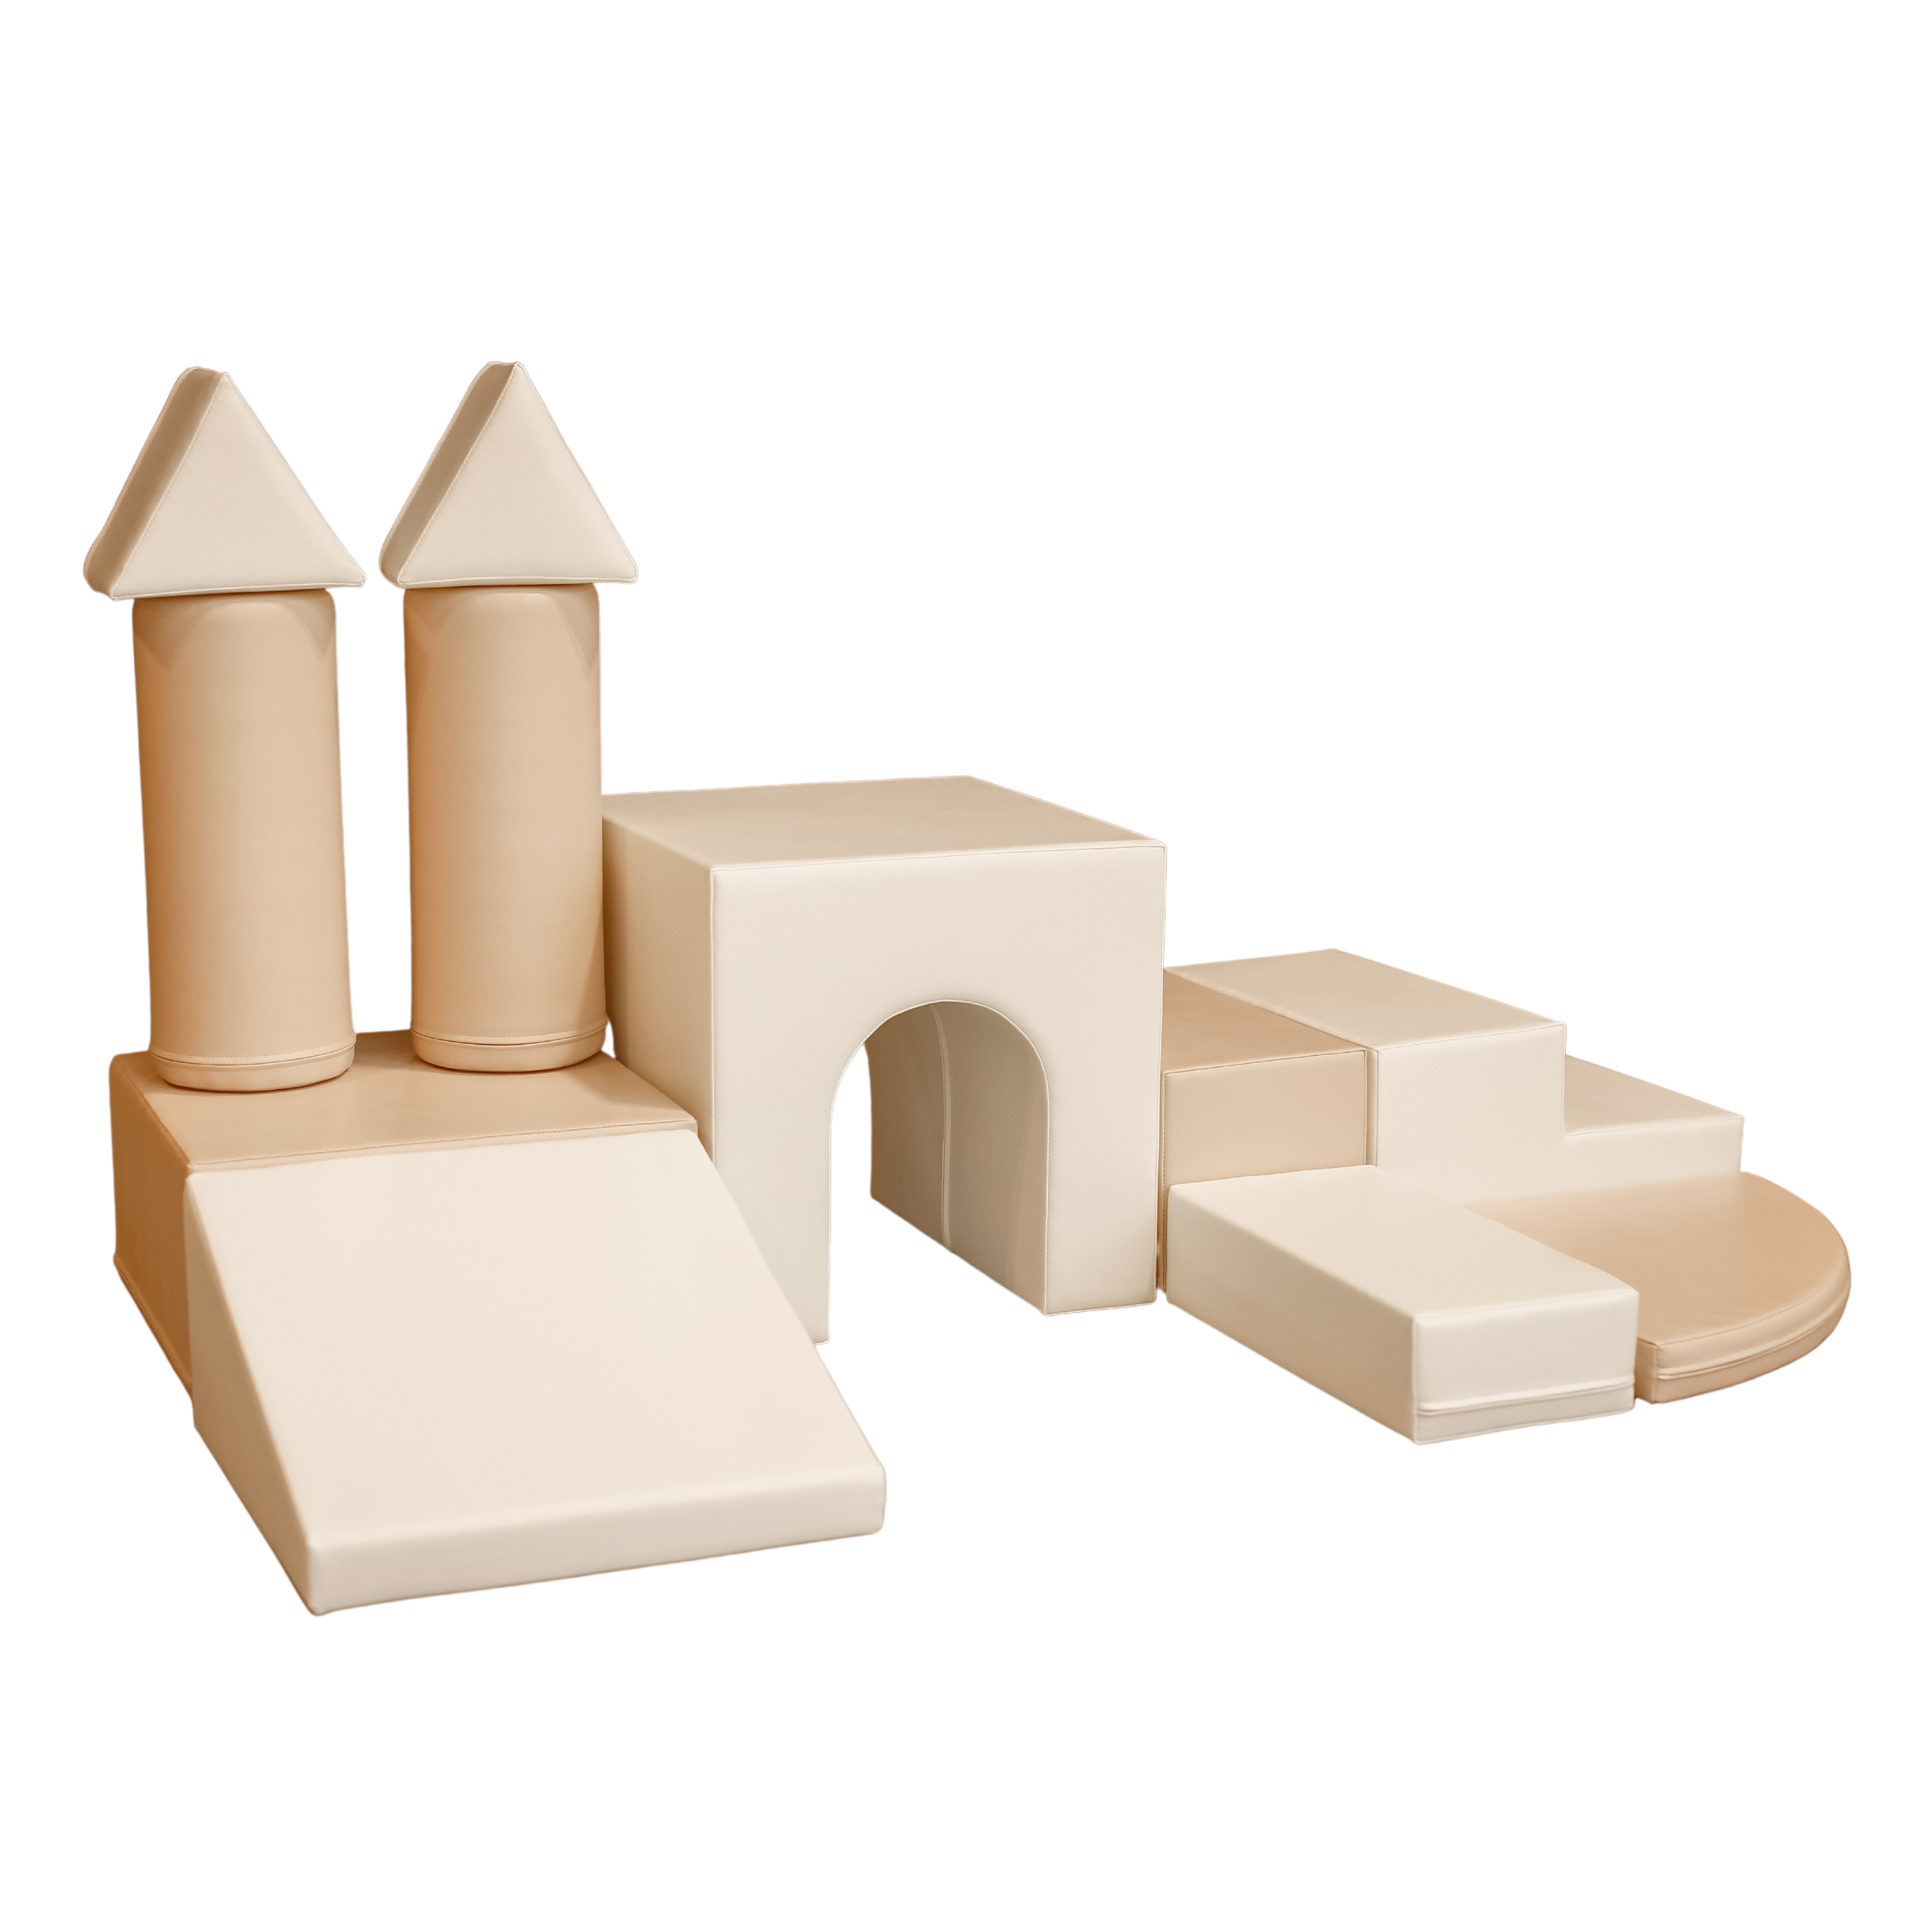 A custom beige color castle set from IGLU